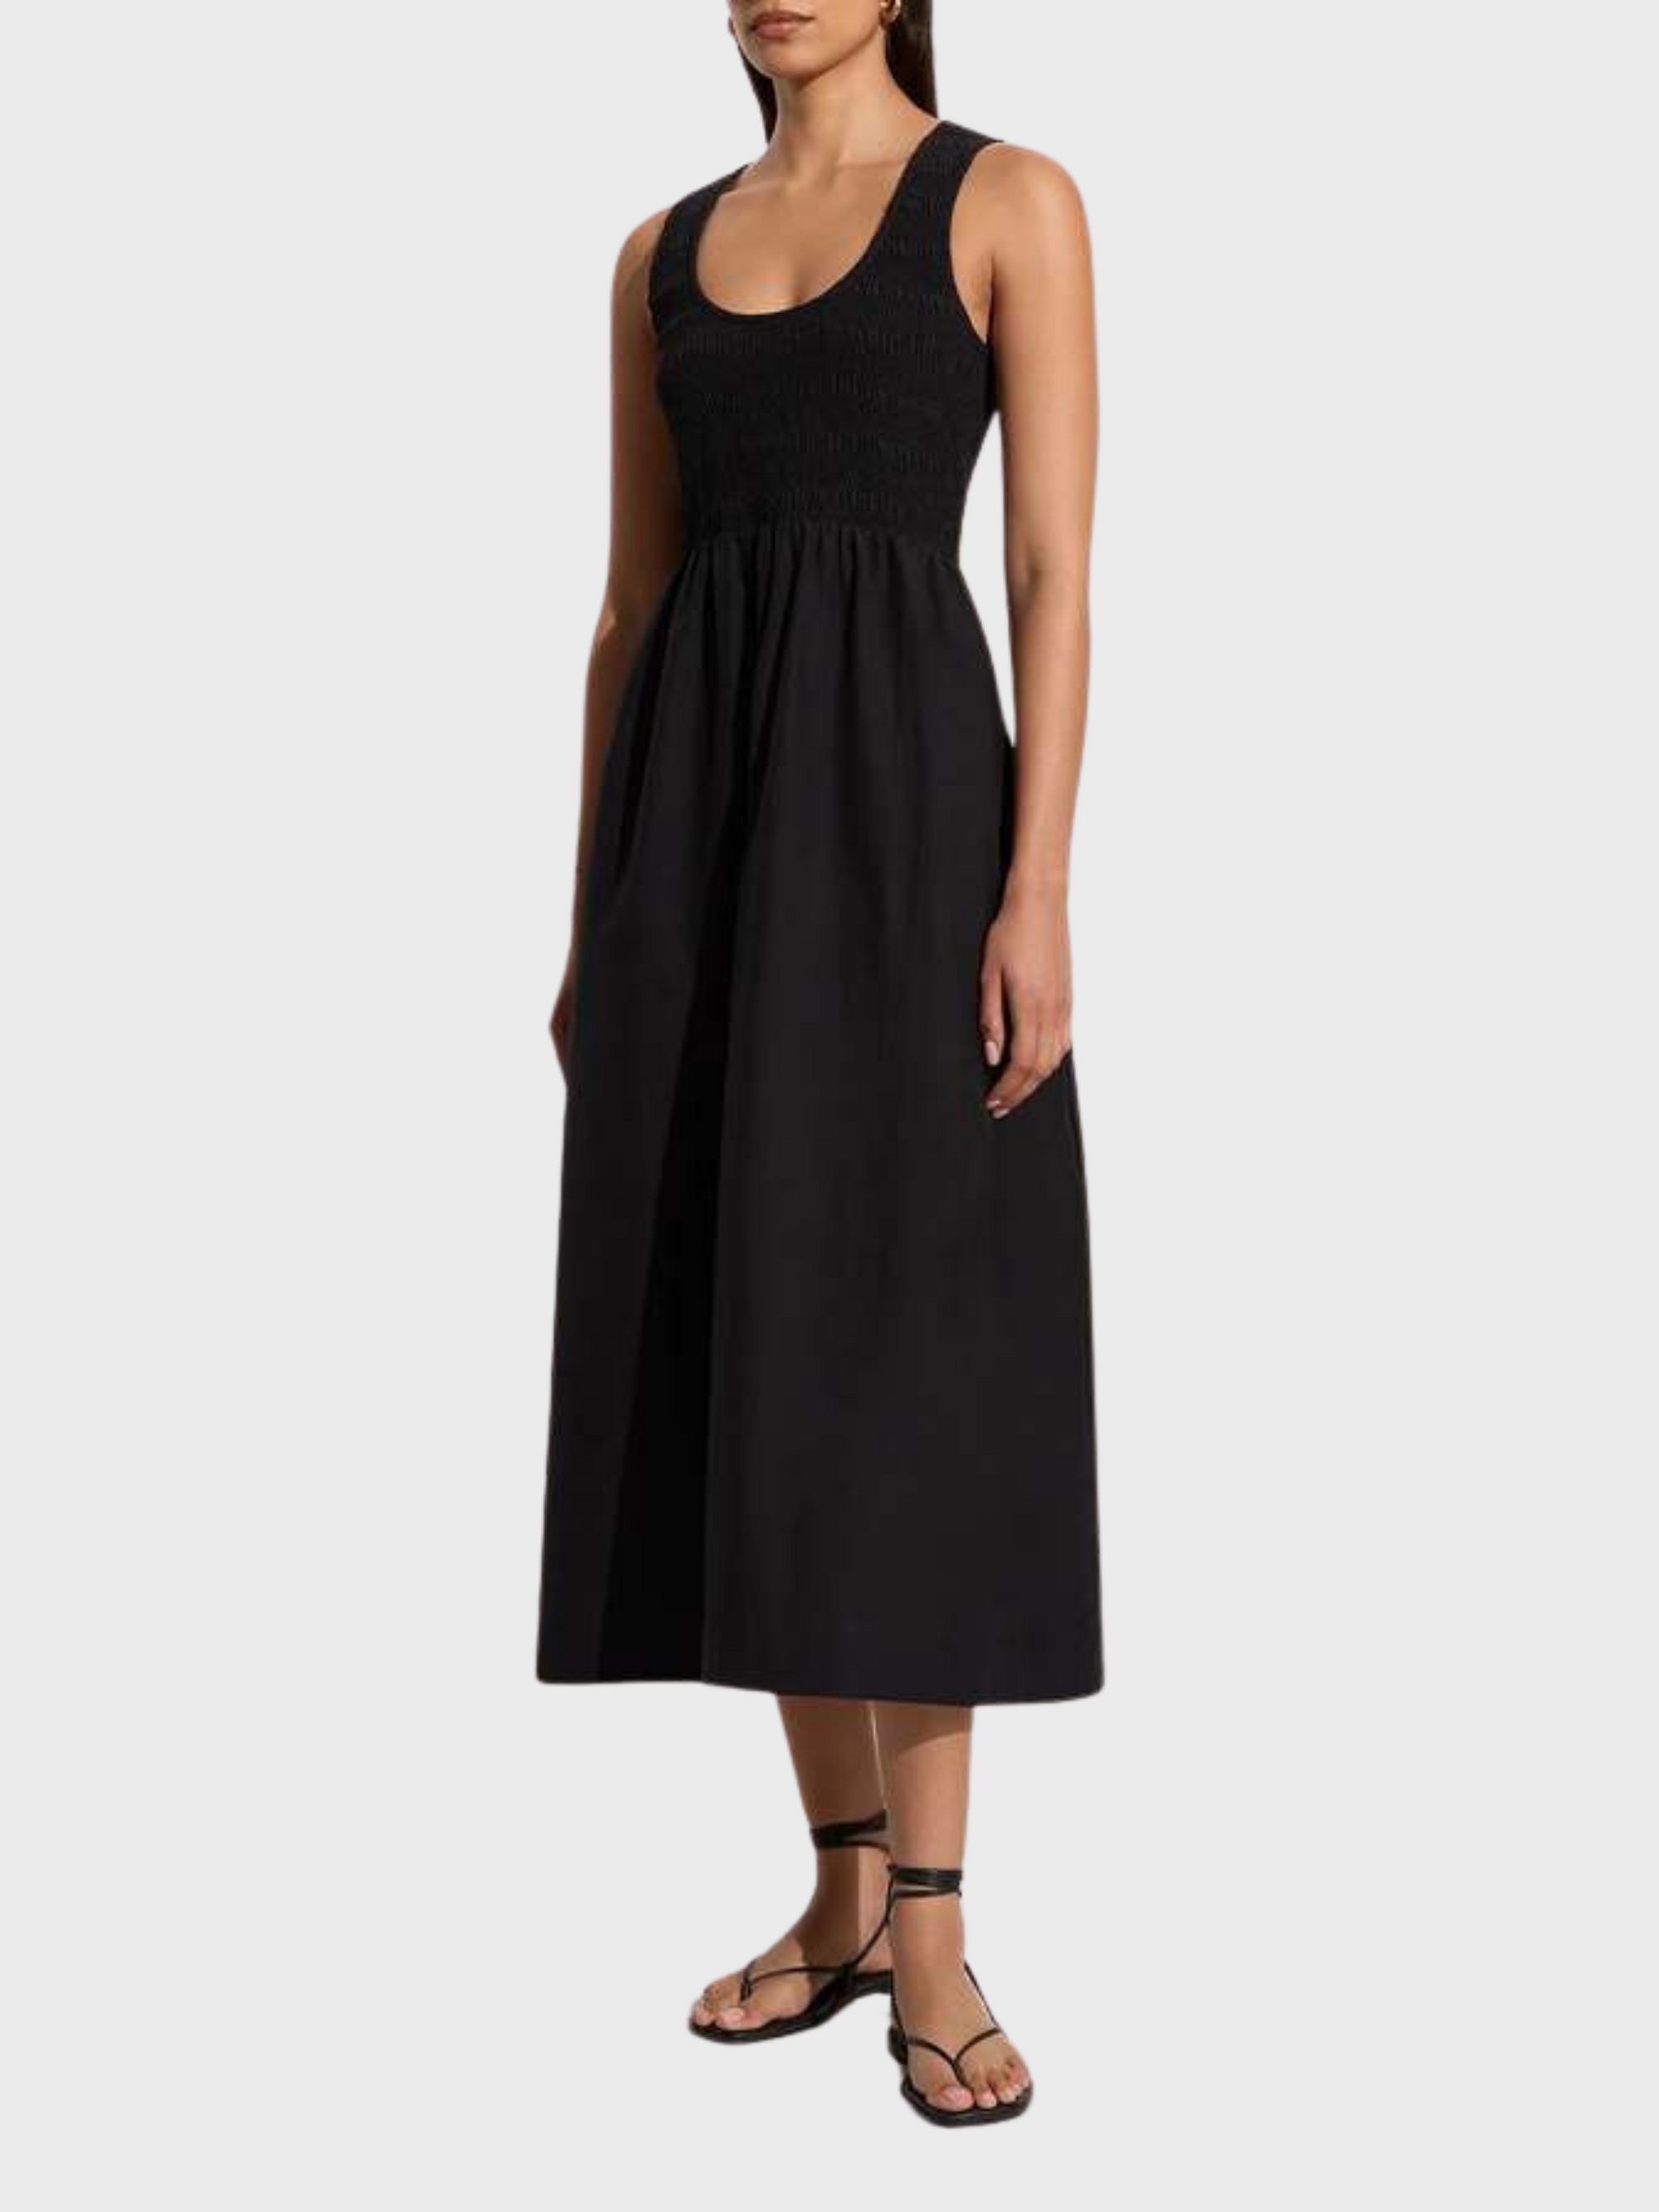 Faithfull Matera Midi Dress Black-Dresses-West of Woodward Boutique-Vancouver-Canada